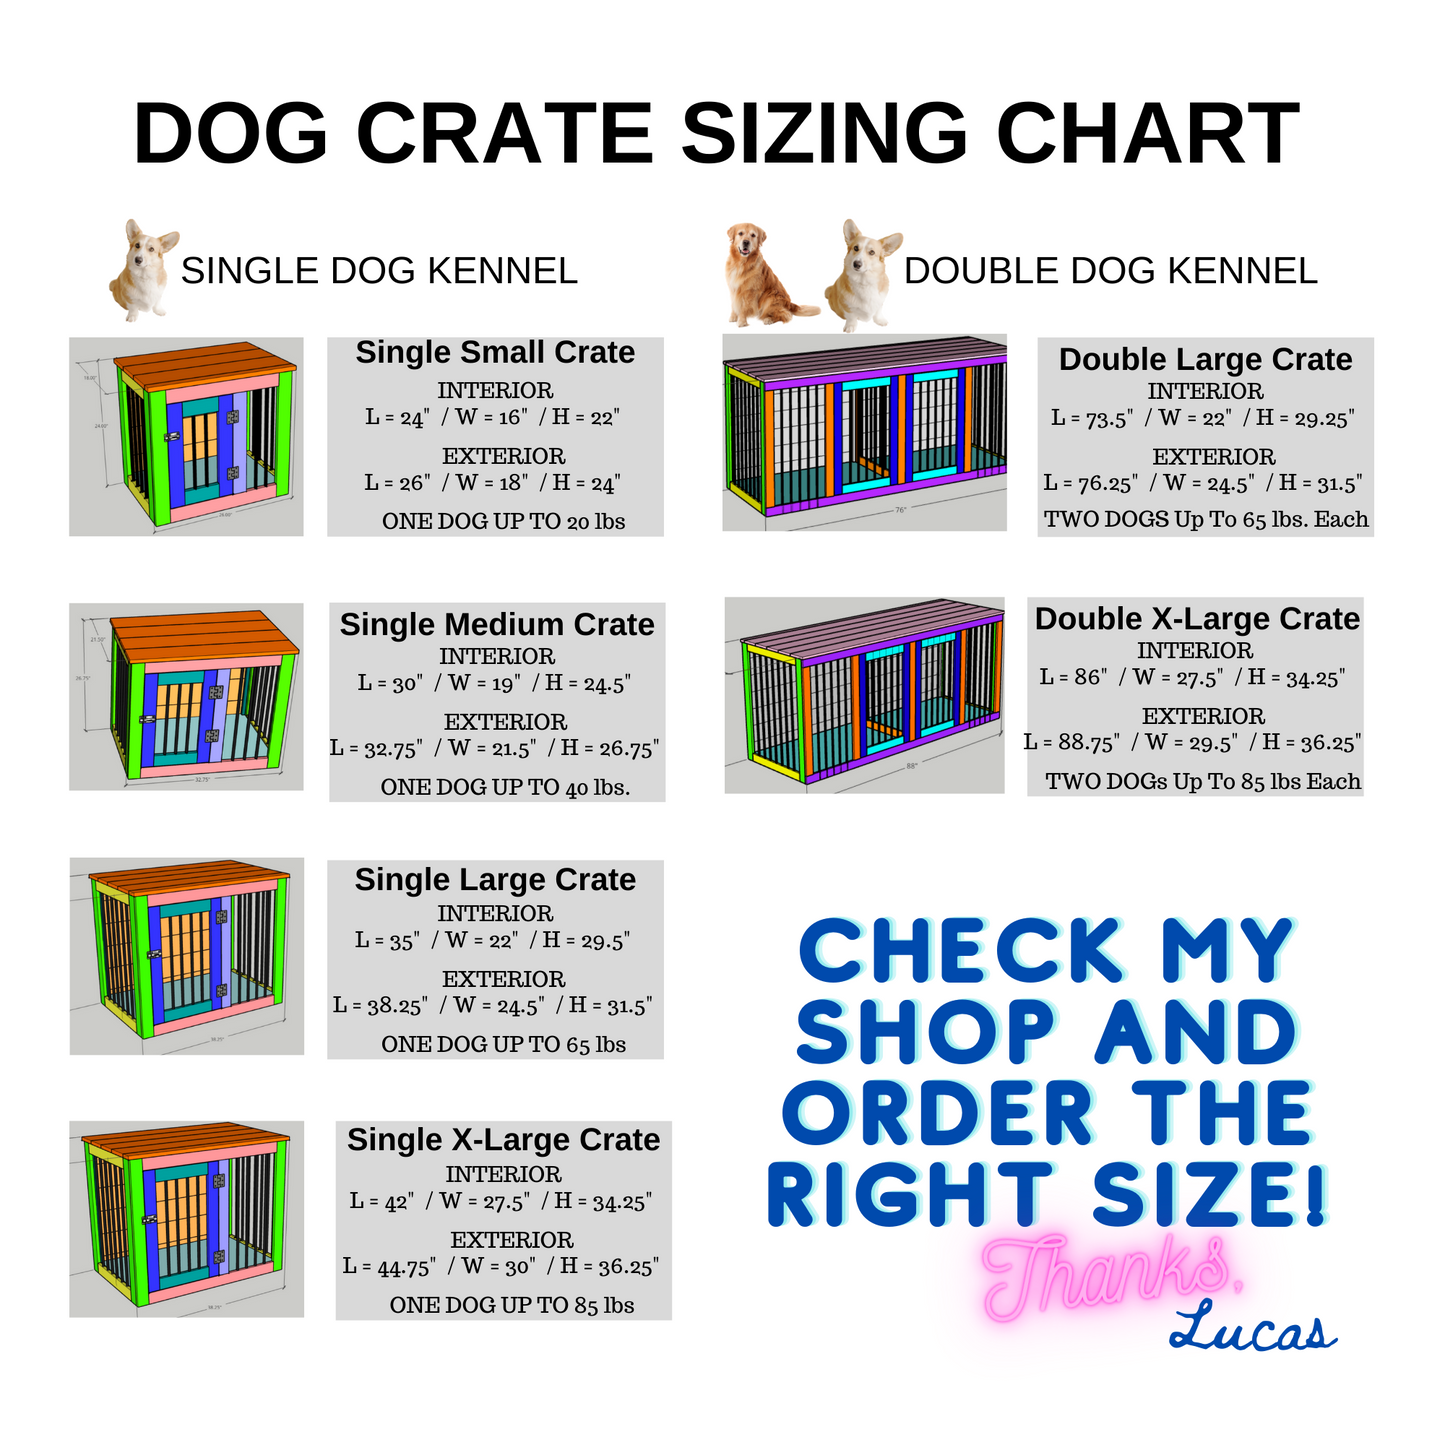 Single XL Dog Crate Plans